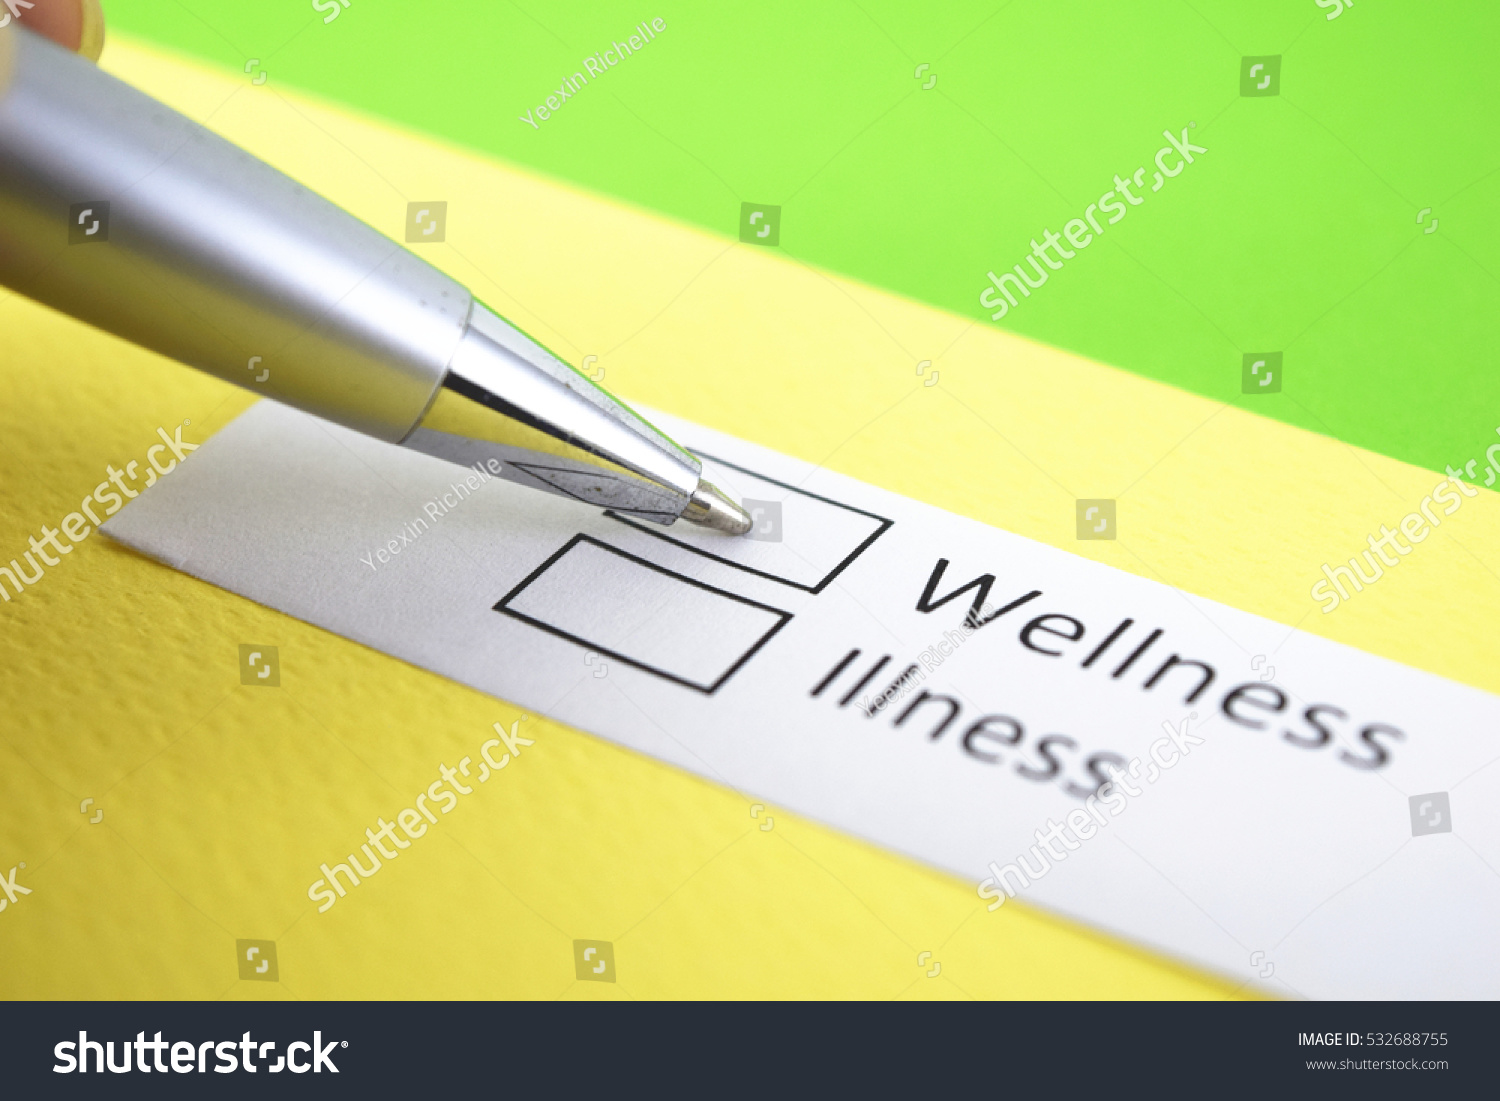 Wellness or illness. Wellness. #532688755